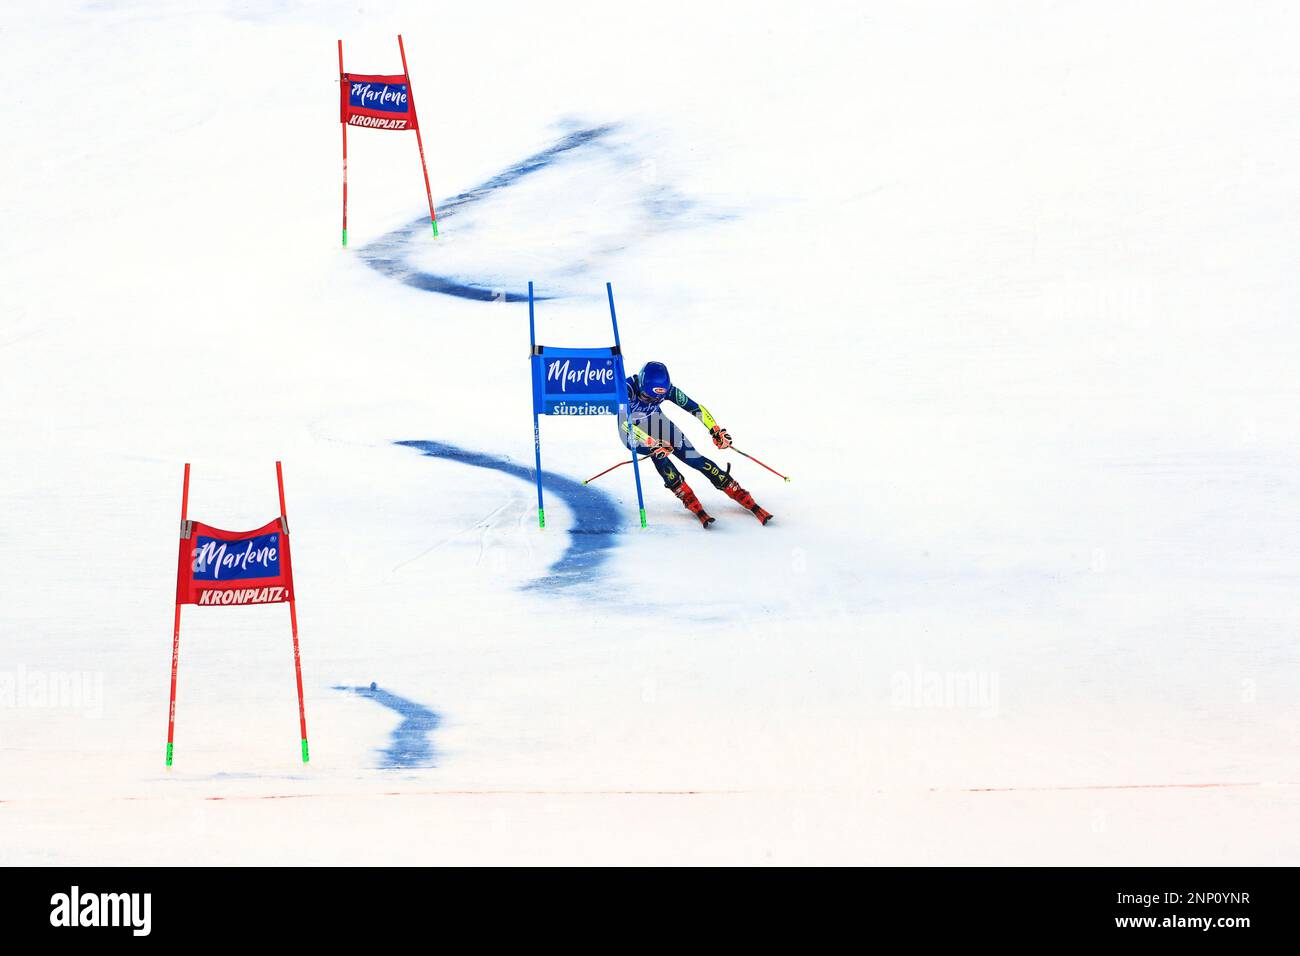 FIS Alpine Ladies Ski World Cup 2021 